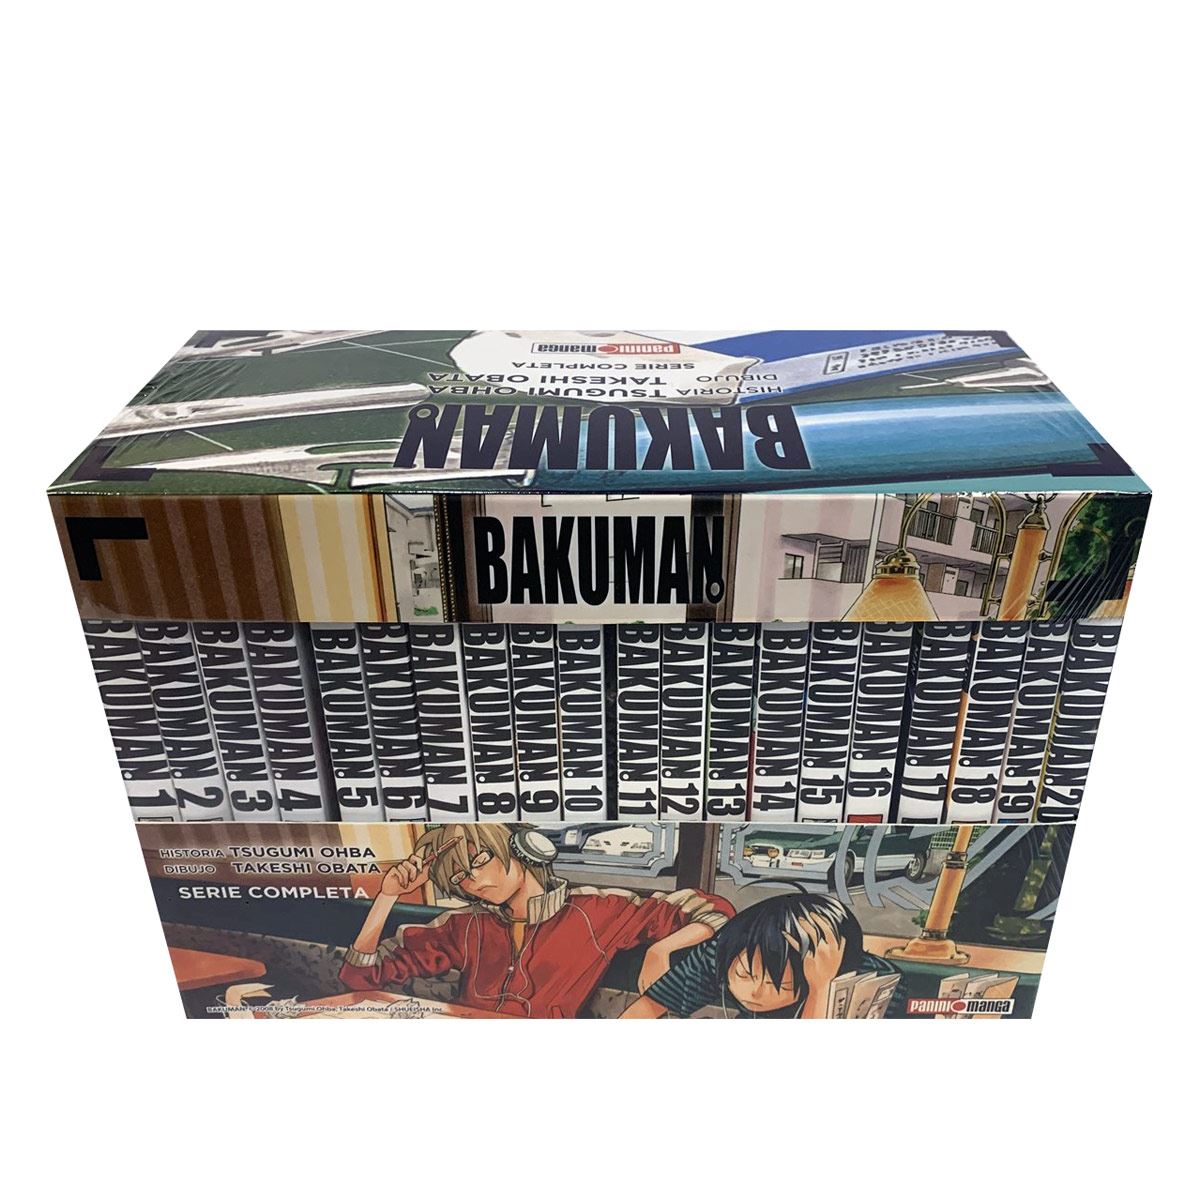 Bakuman Boxset